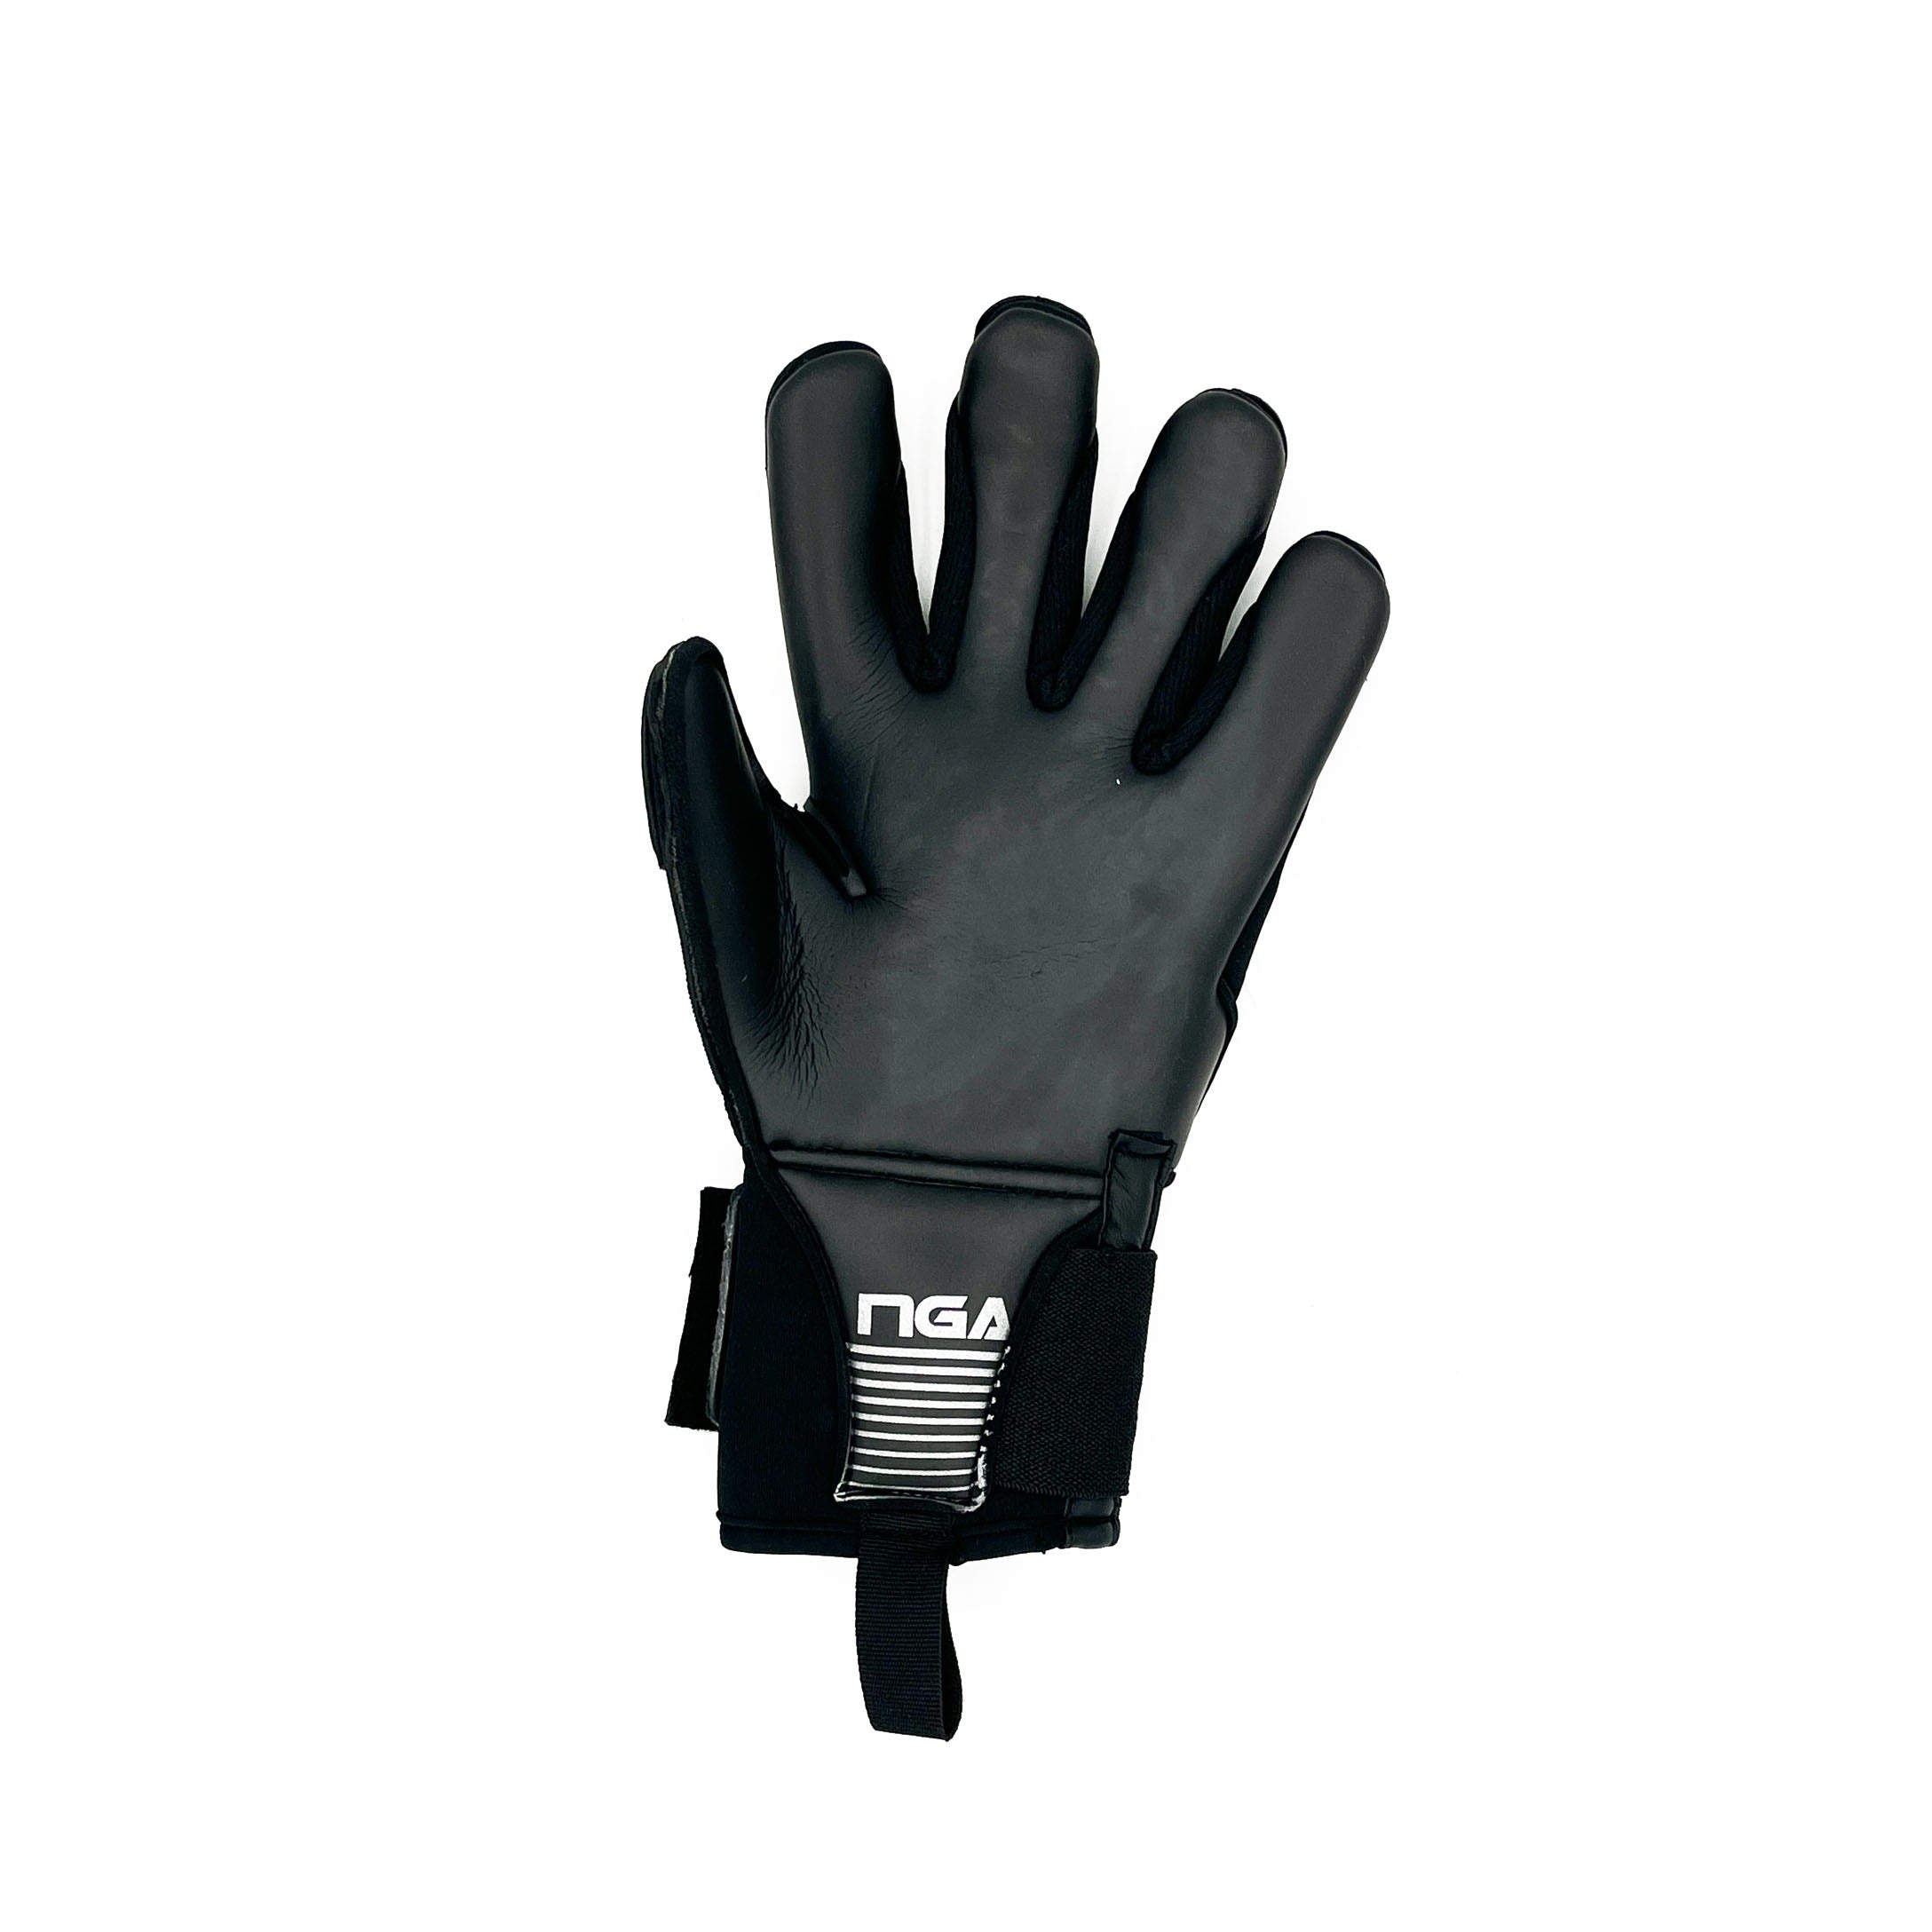 Venture Black/White Goalkeeper Glove